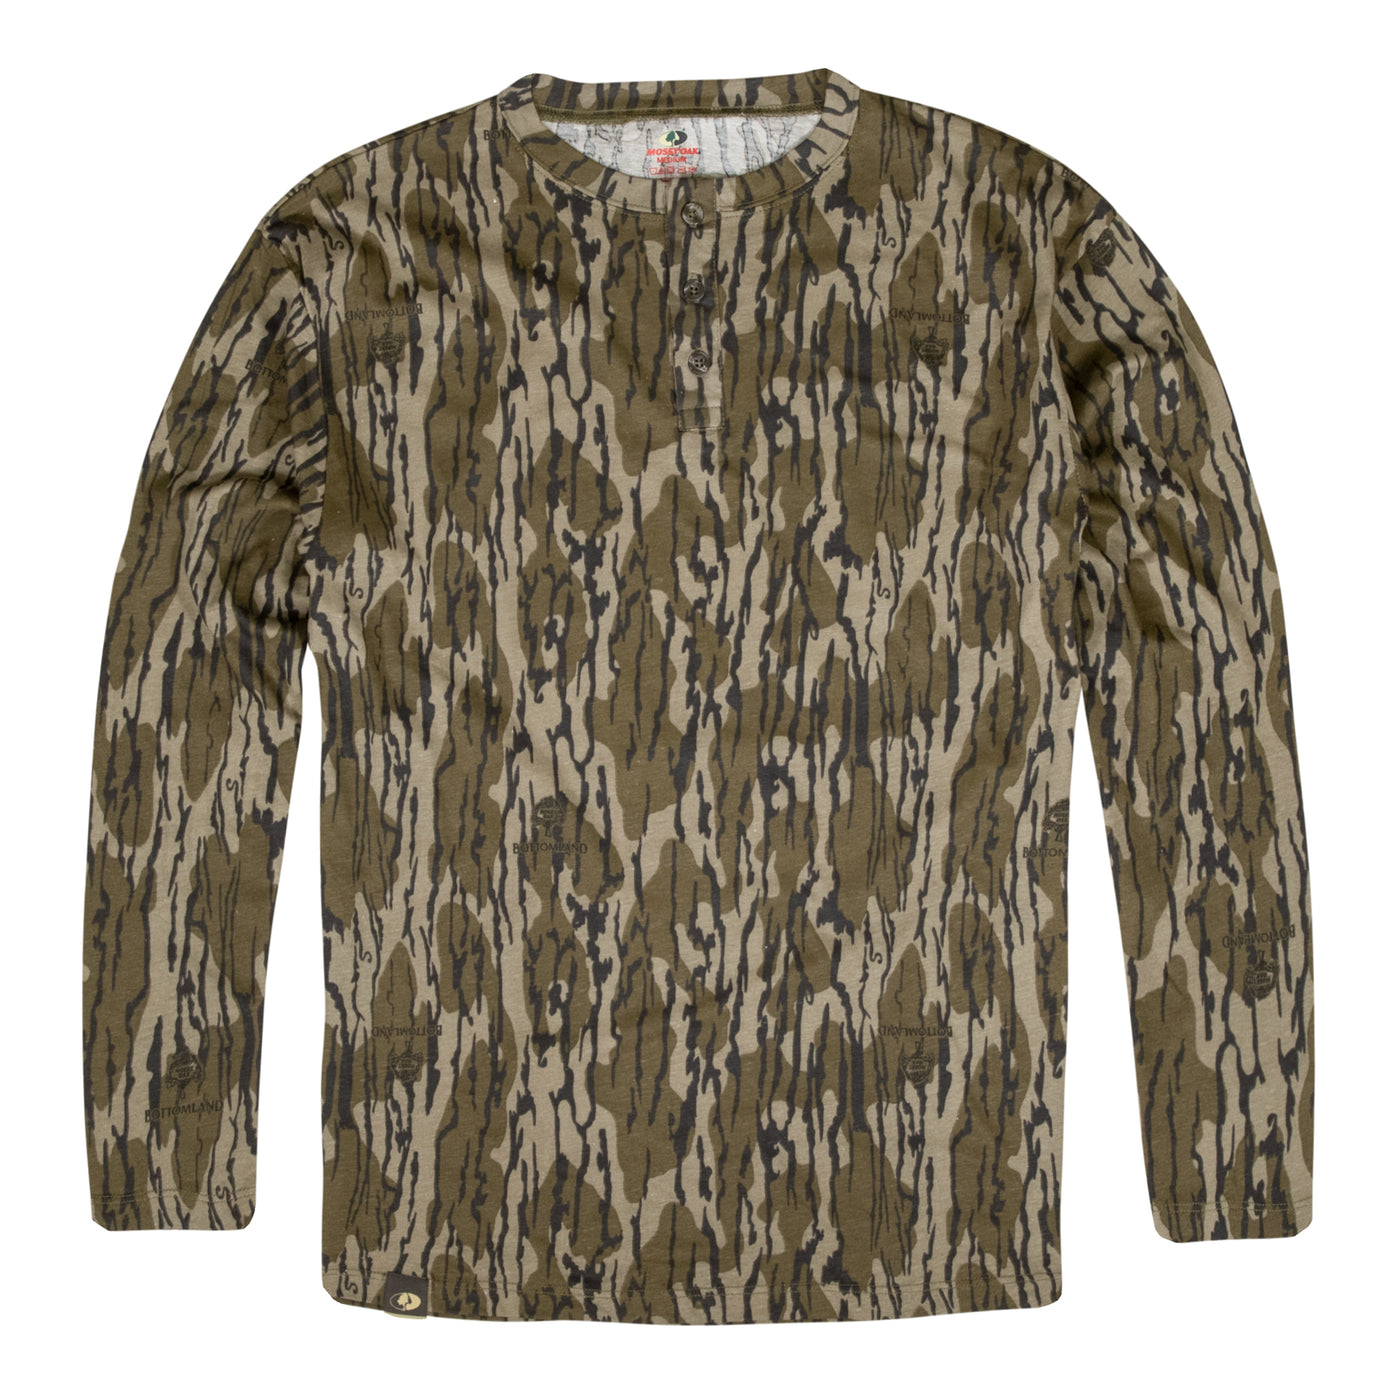 Mossy Oak Camo Nightgown Henley Sleep Shirt, Camouflage Lingerie